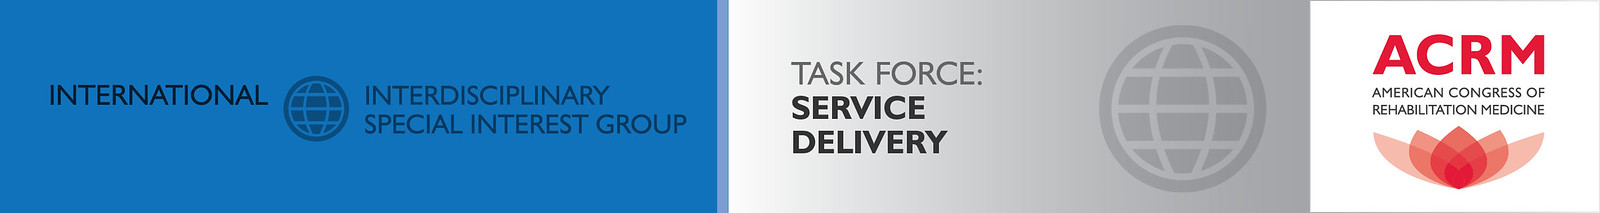 ACRM Service Delivery Task Force header